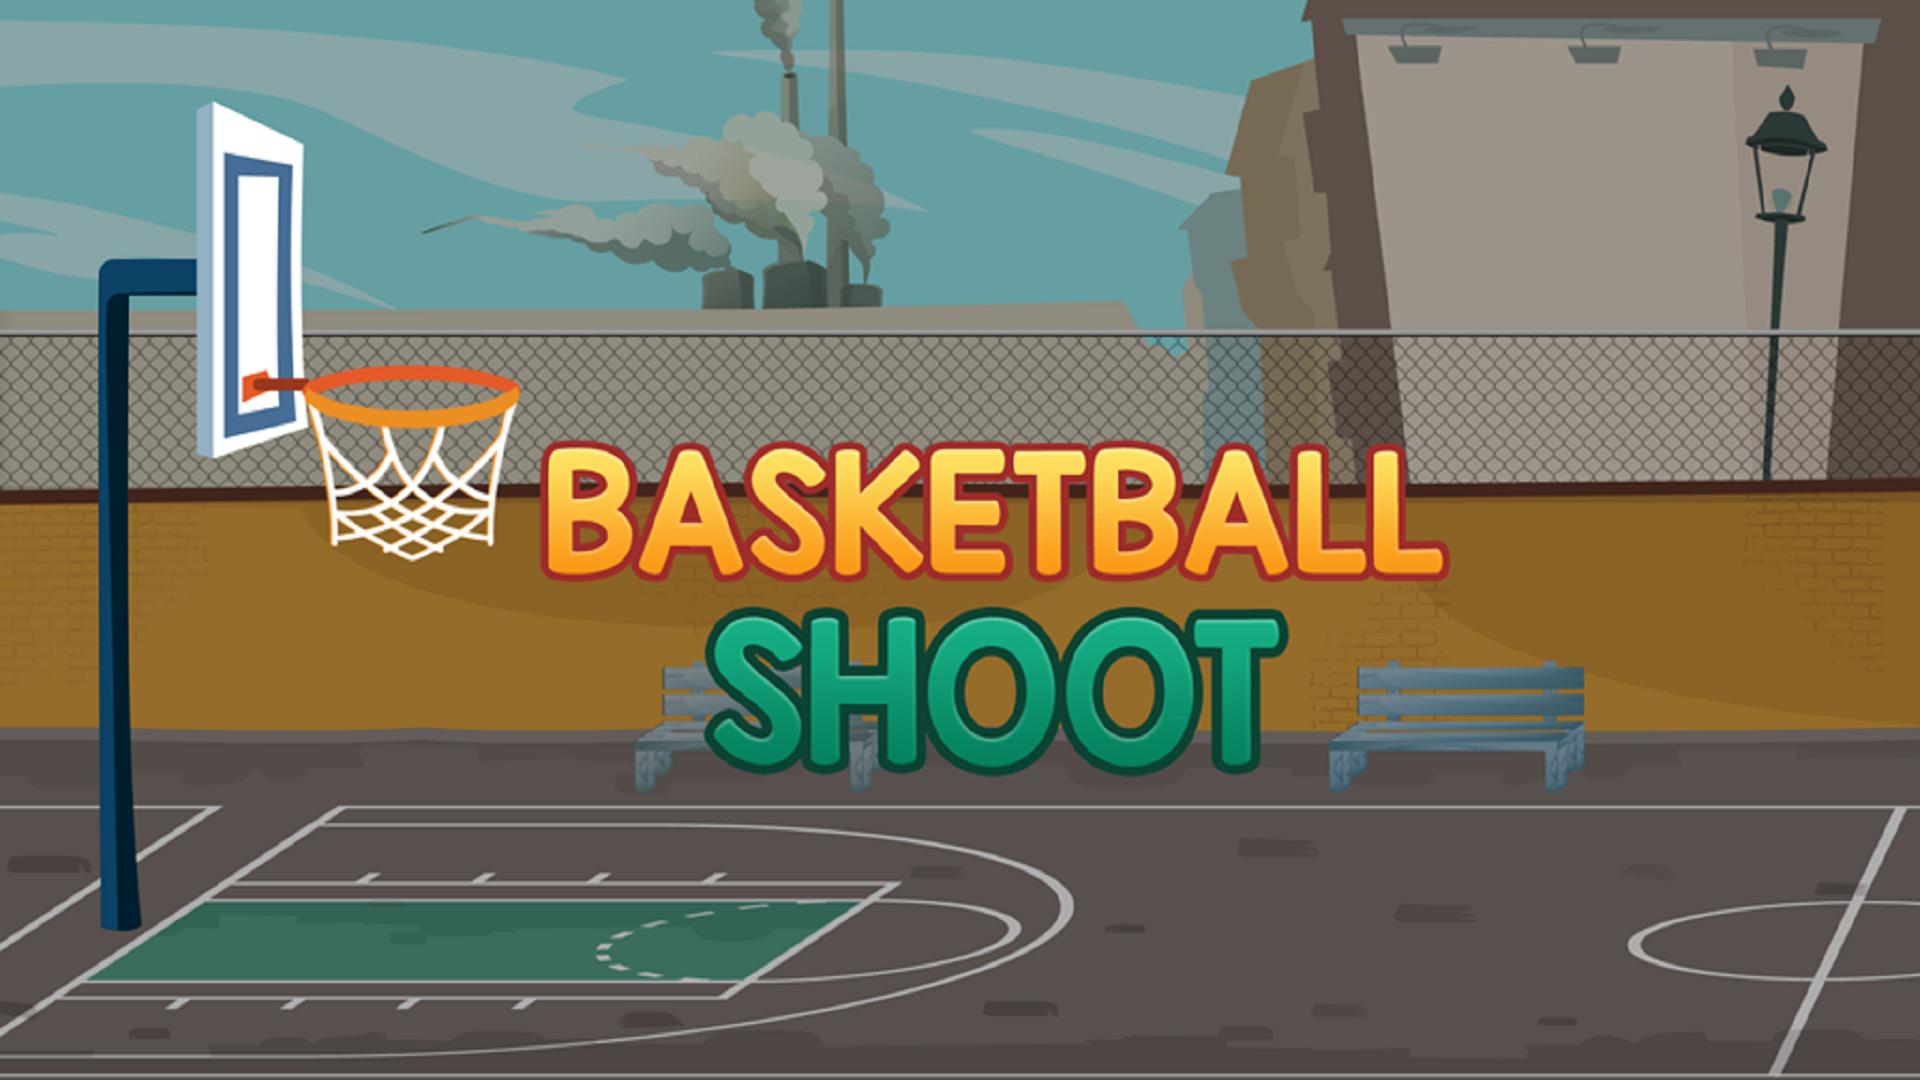 Basketball shoot игра. Basketball shoot IOS. Баскетбол дуэль я не помню как называется играть айфон. Баскетбол игра билеты